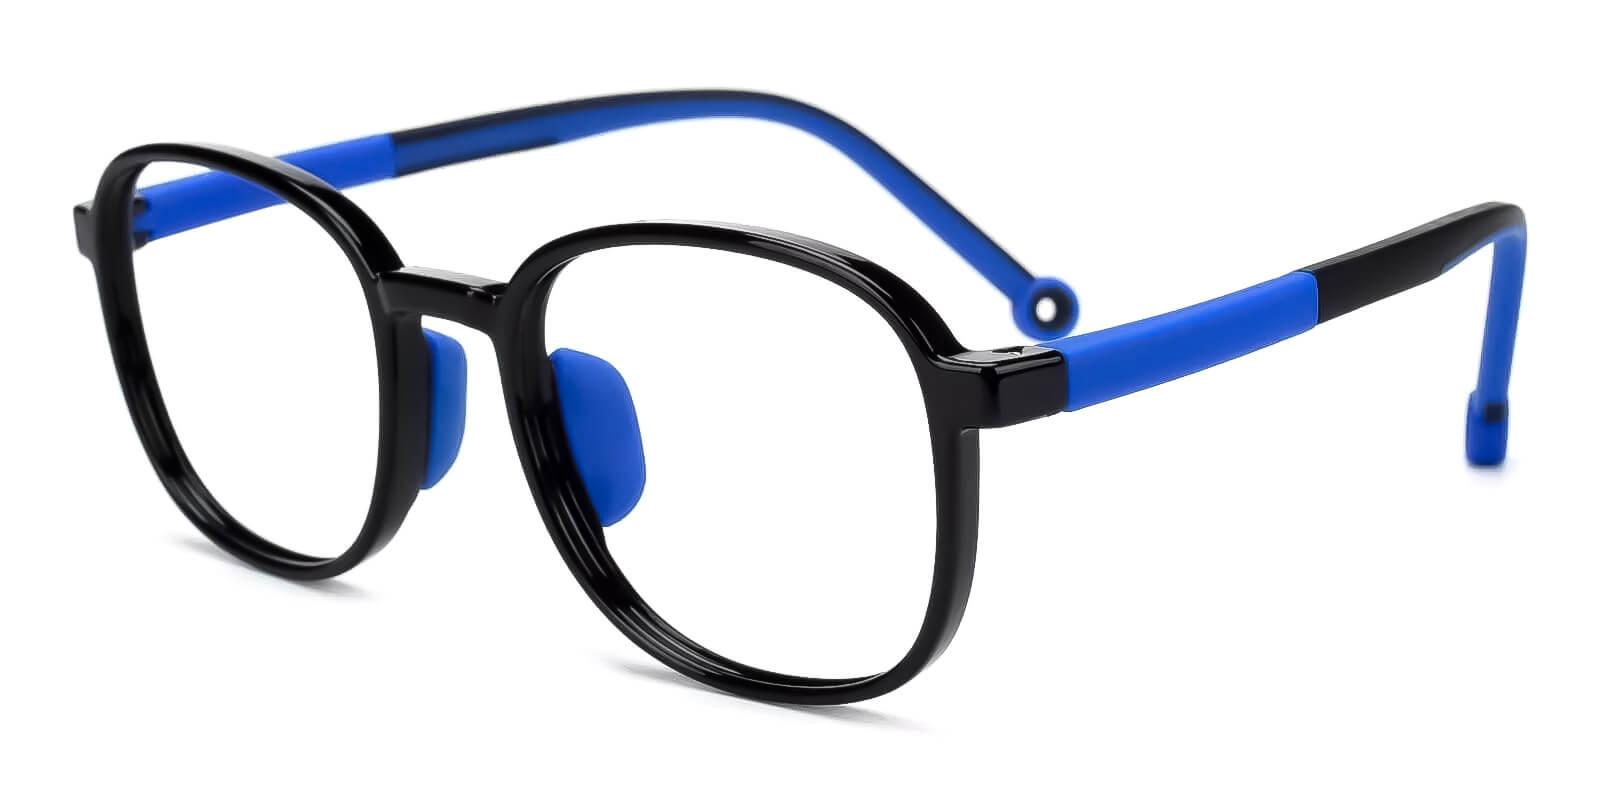 Kids-Astute Black TR Eyeglasses , Fashion , UniversalBridgeFit Frames from ABBE Glasses